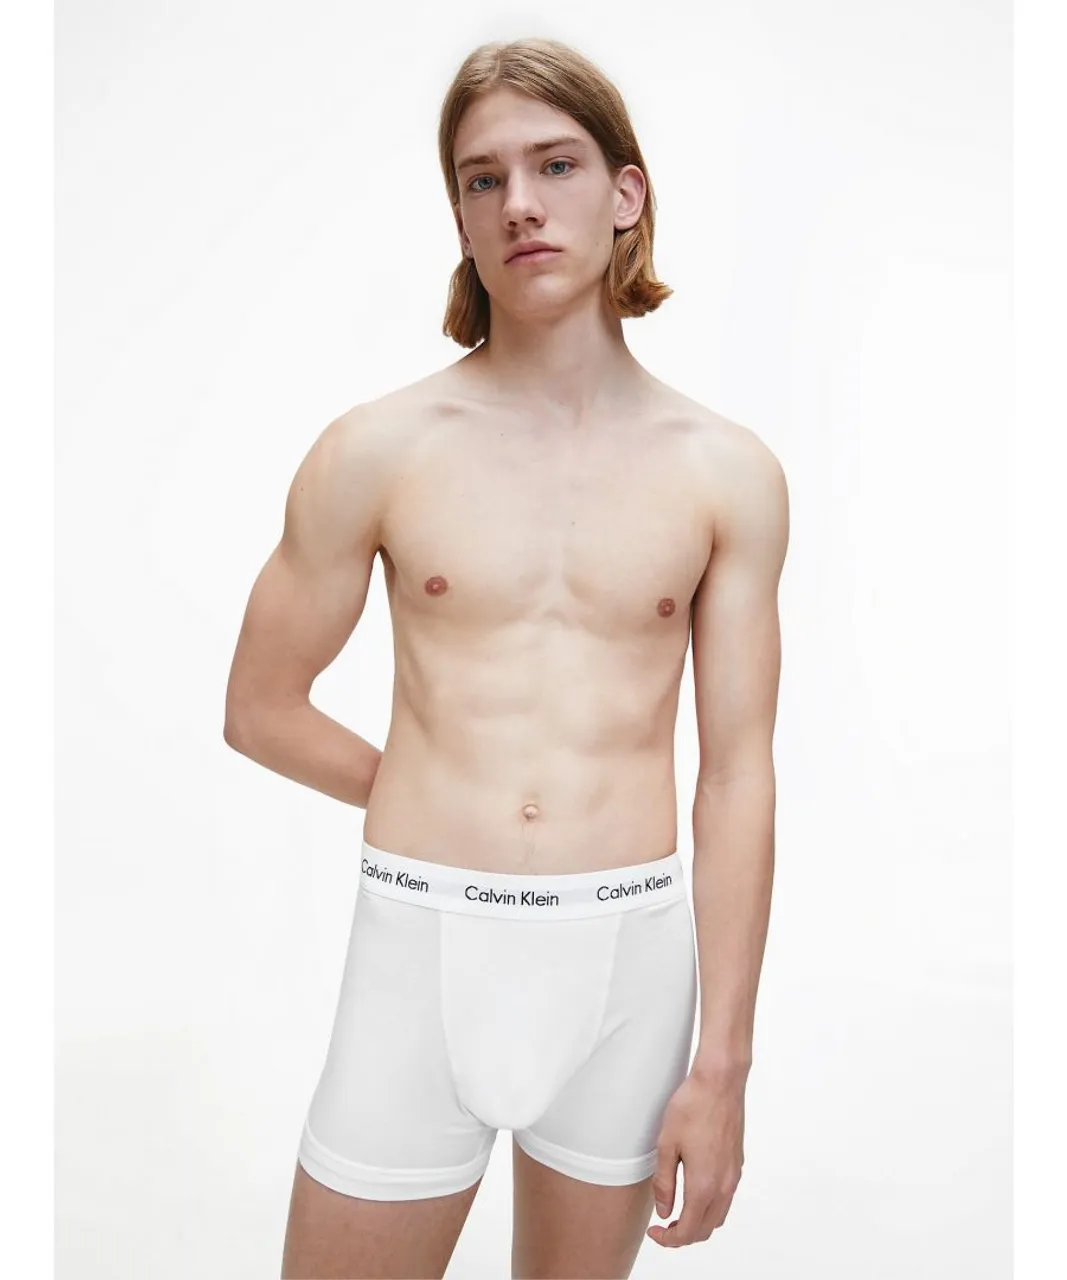 Calvin Klein Mens 3 Pack Trunks - Mid Rise - Cotton Stretch, White